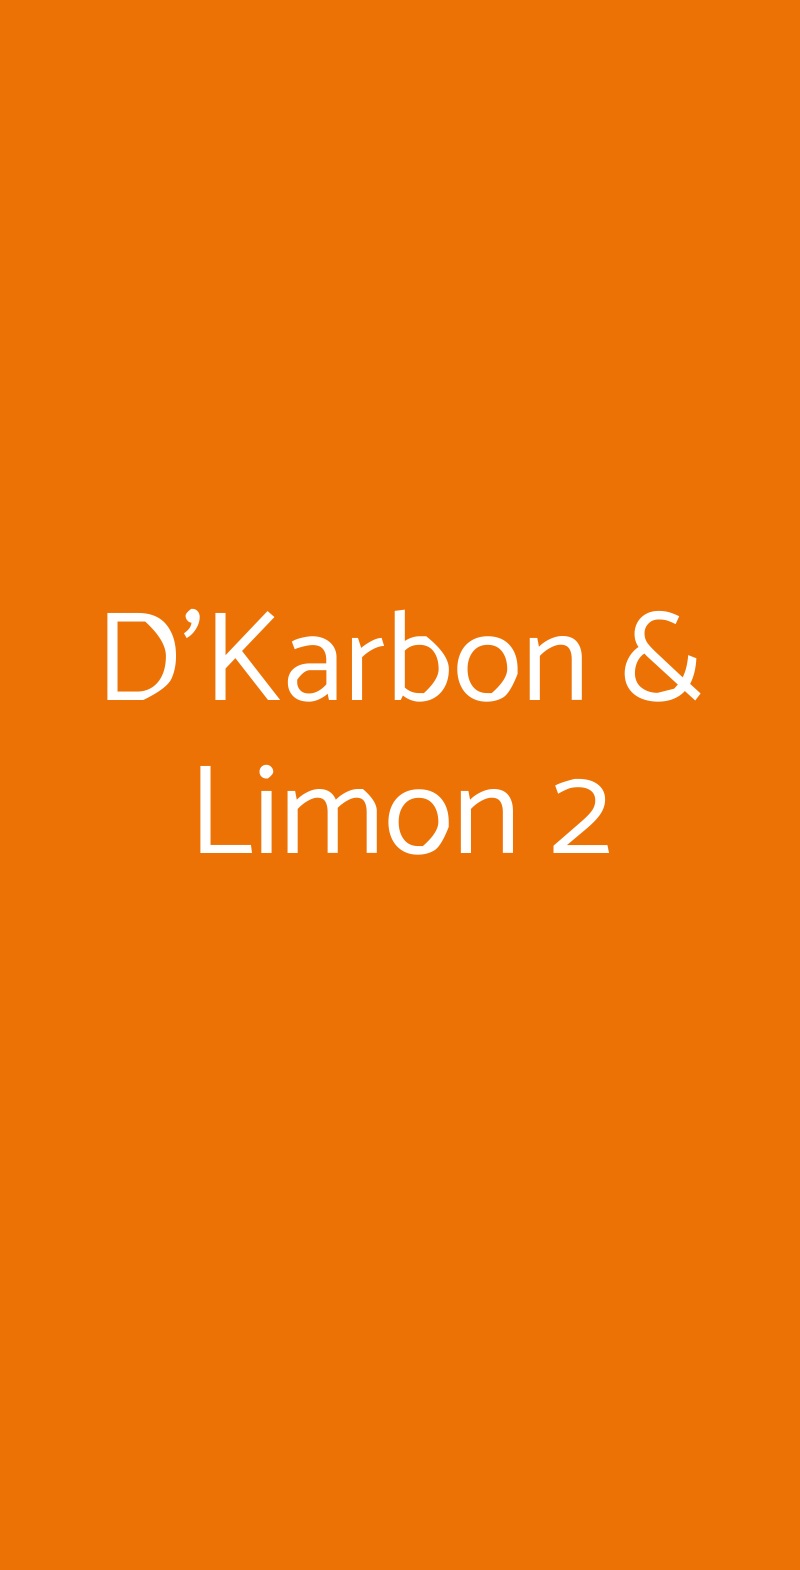 D'Karbon & Limon 2 Milano menù 1 pagina